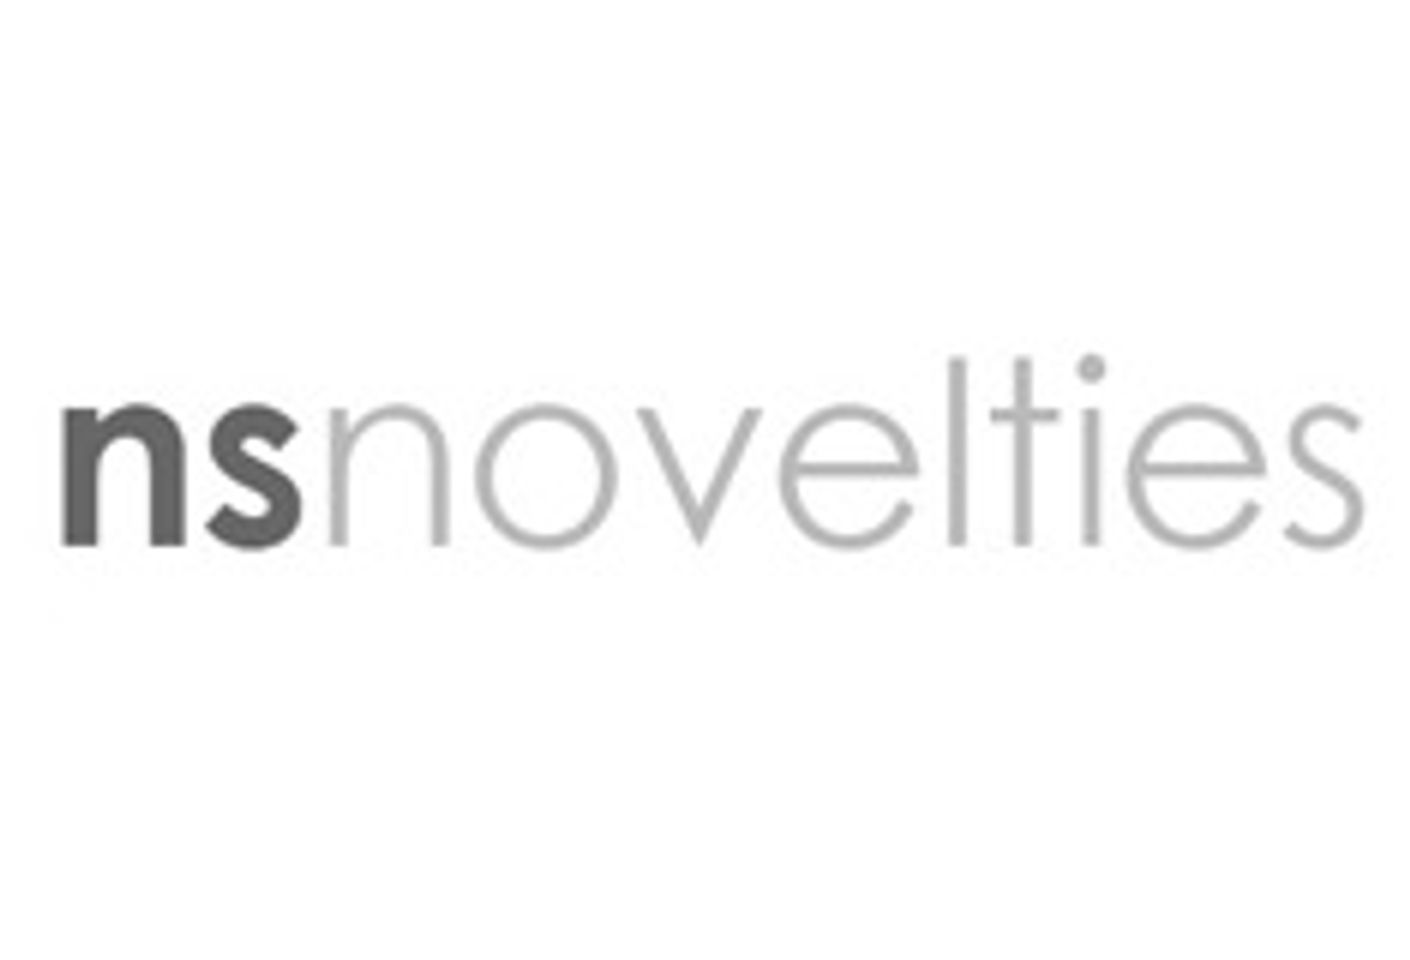 NS Novelties Debuts New Items, Has Successful Trade Show